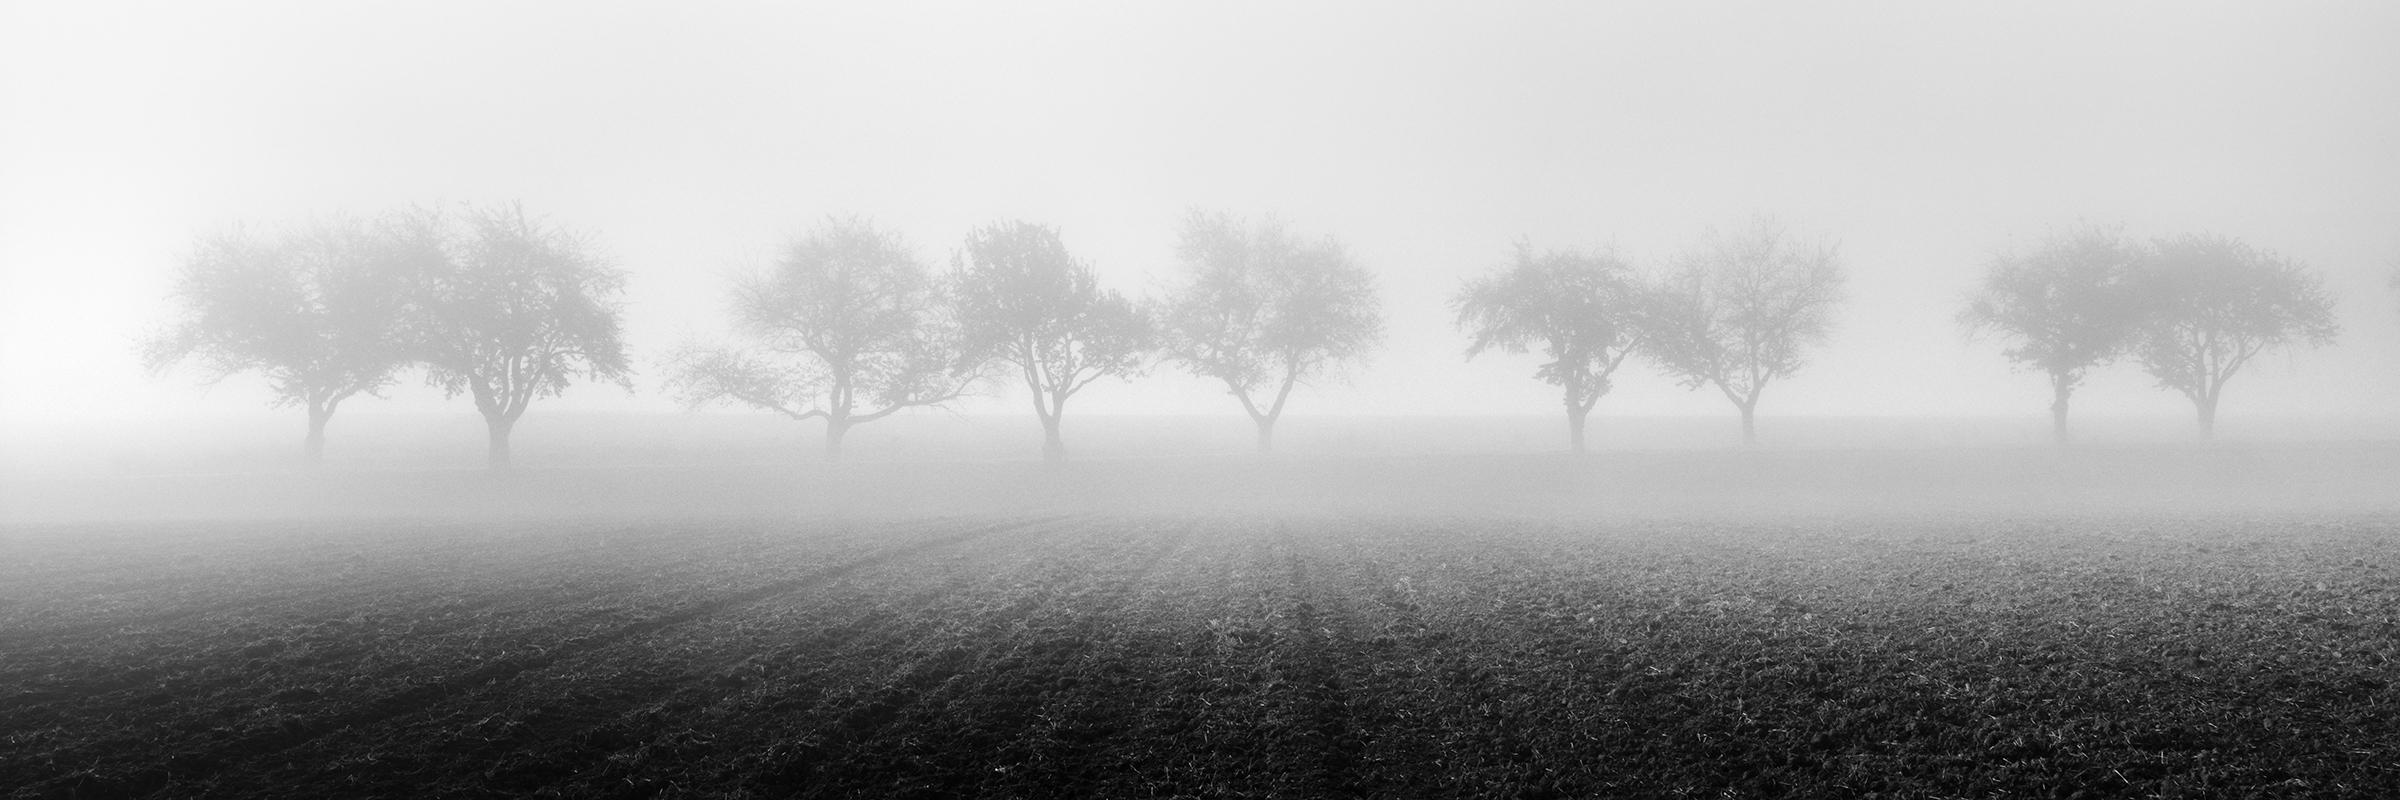 Matin brumeux, The Row of Cherry Trees, photographie noir et blanc, art paysage